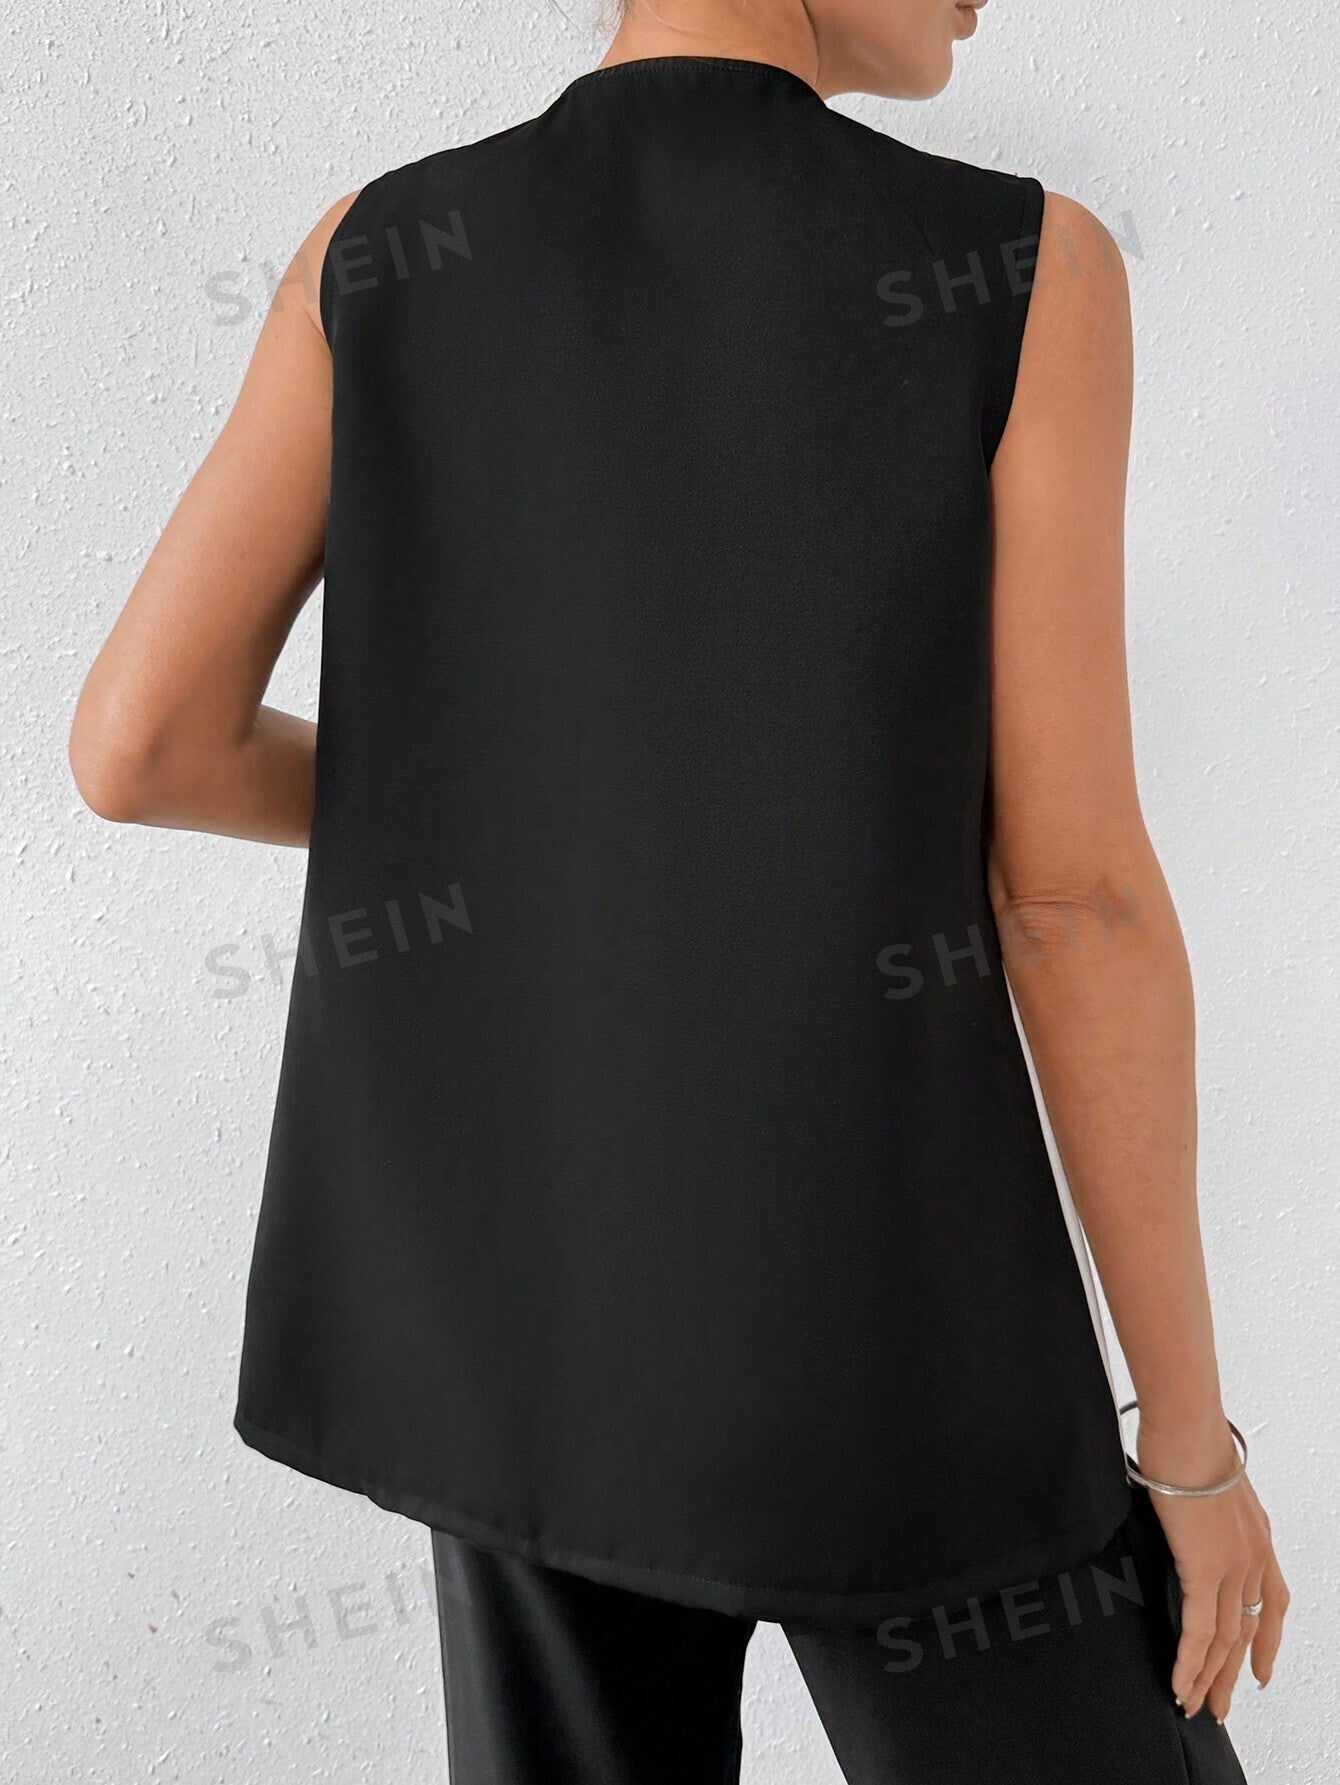 Clasi Women's Sleeveless Color Block Blazer Jacket - Negative Apparel